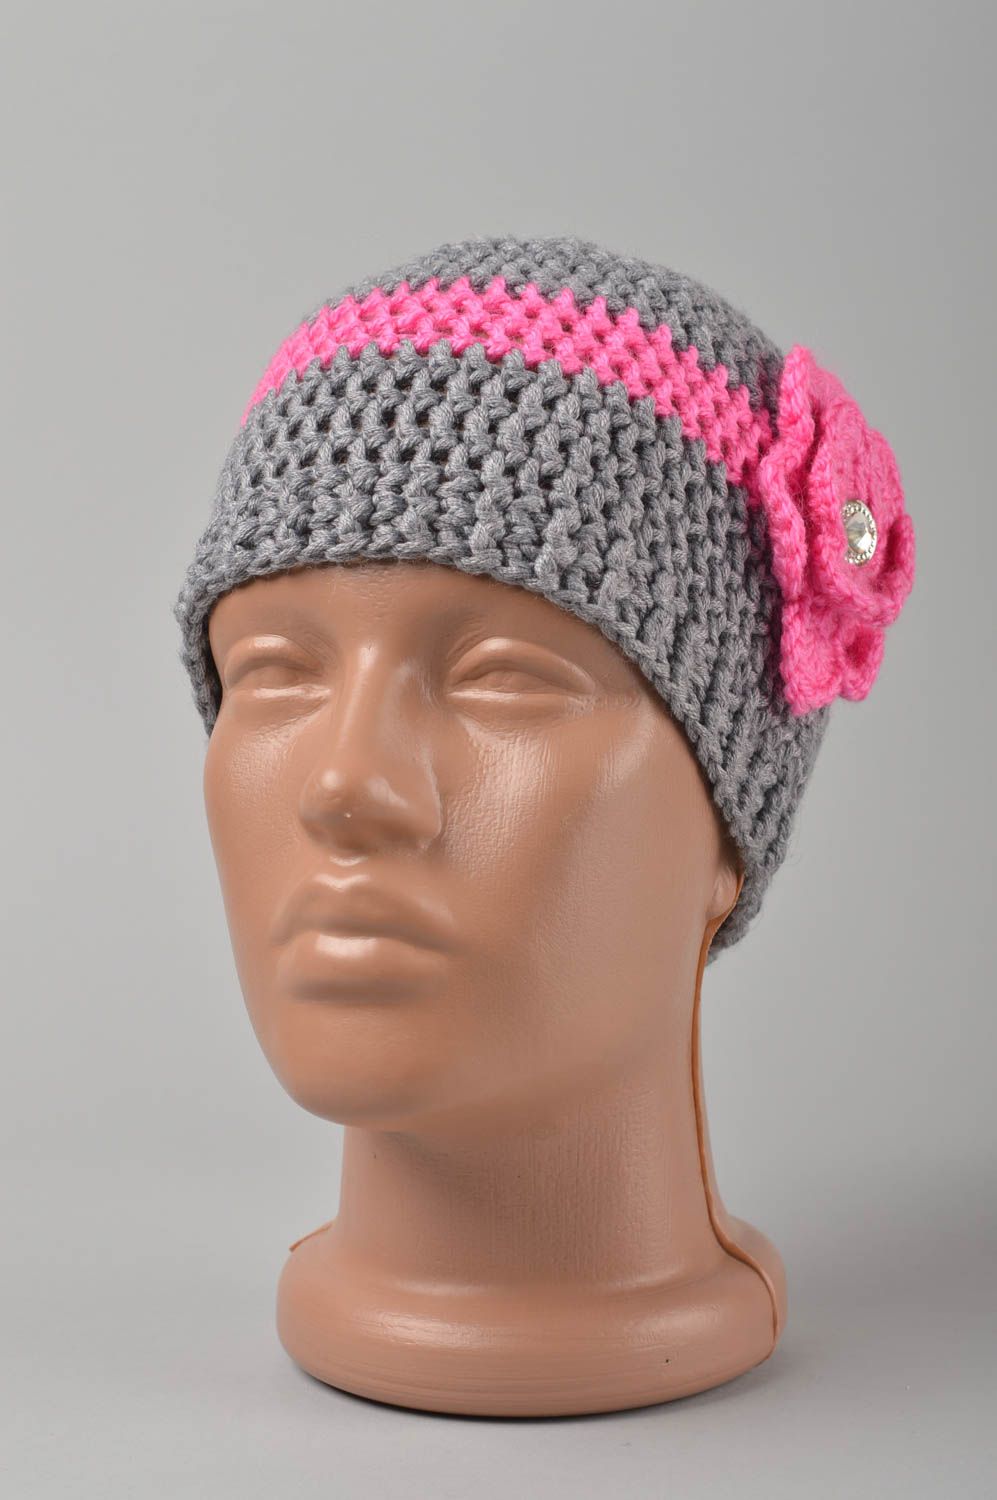 Handmade hat winter hat crocheted hat designer hat warm hat for girl unusual hat photo 1